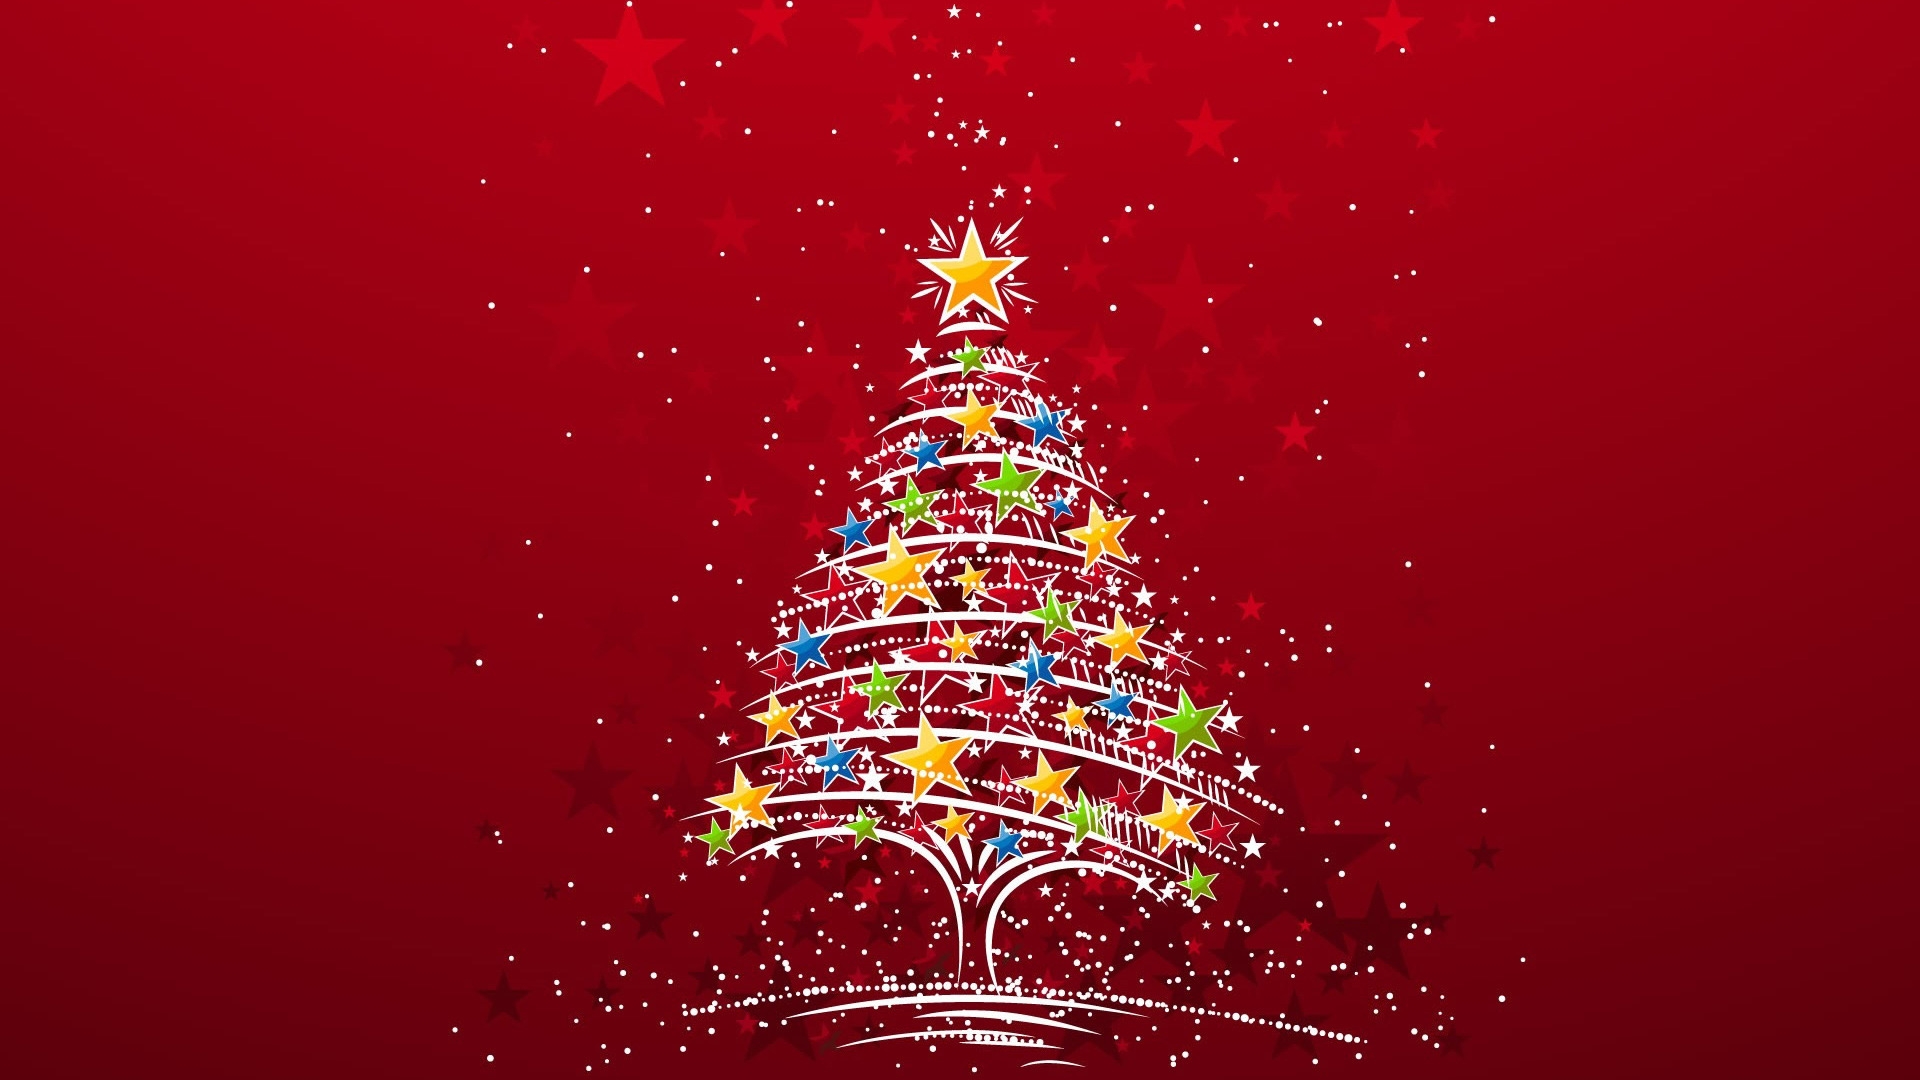 Beautiful Christmas Tree for 1920 x 1080 HDTV 1080p resolution